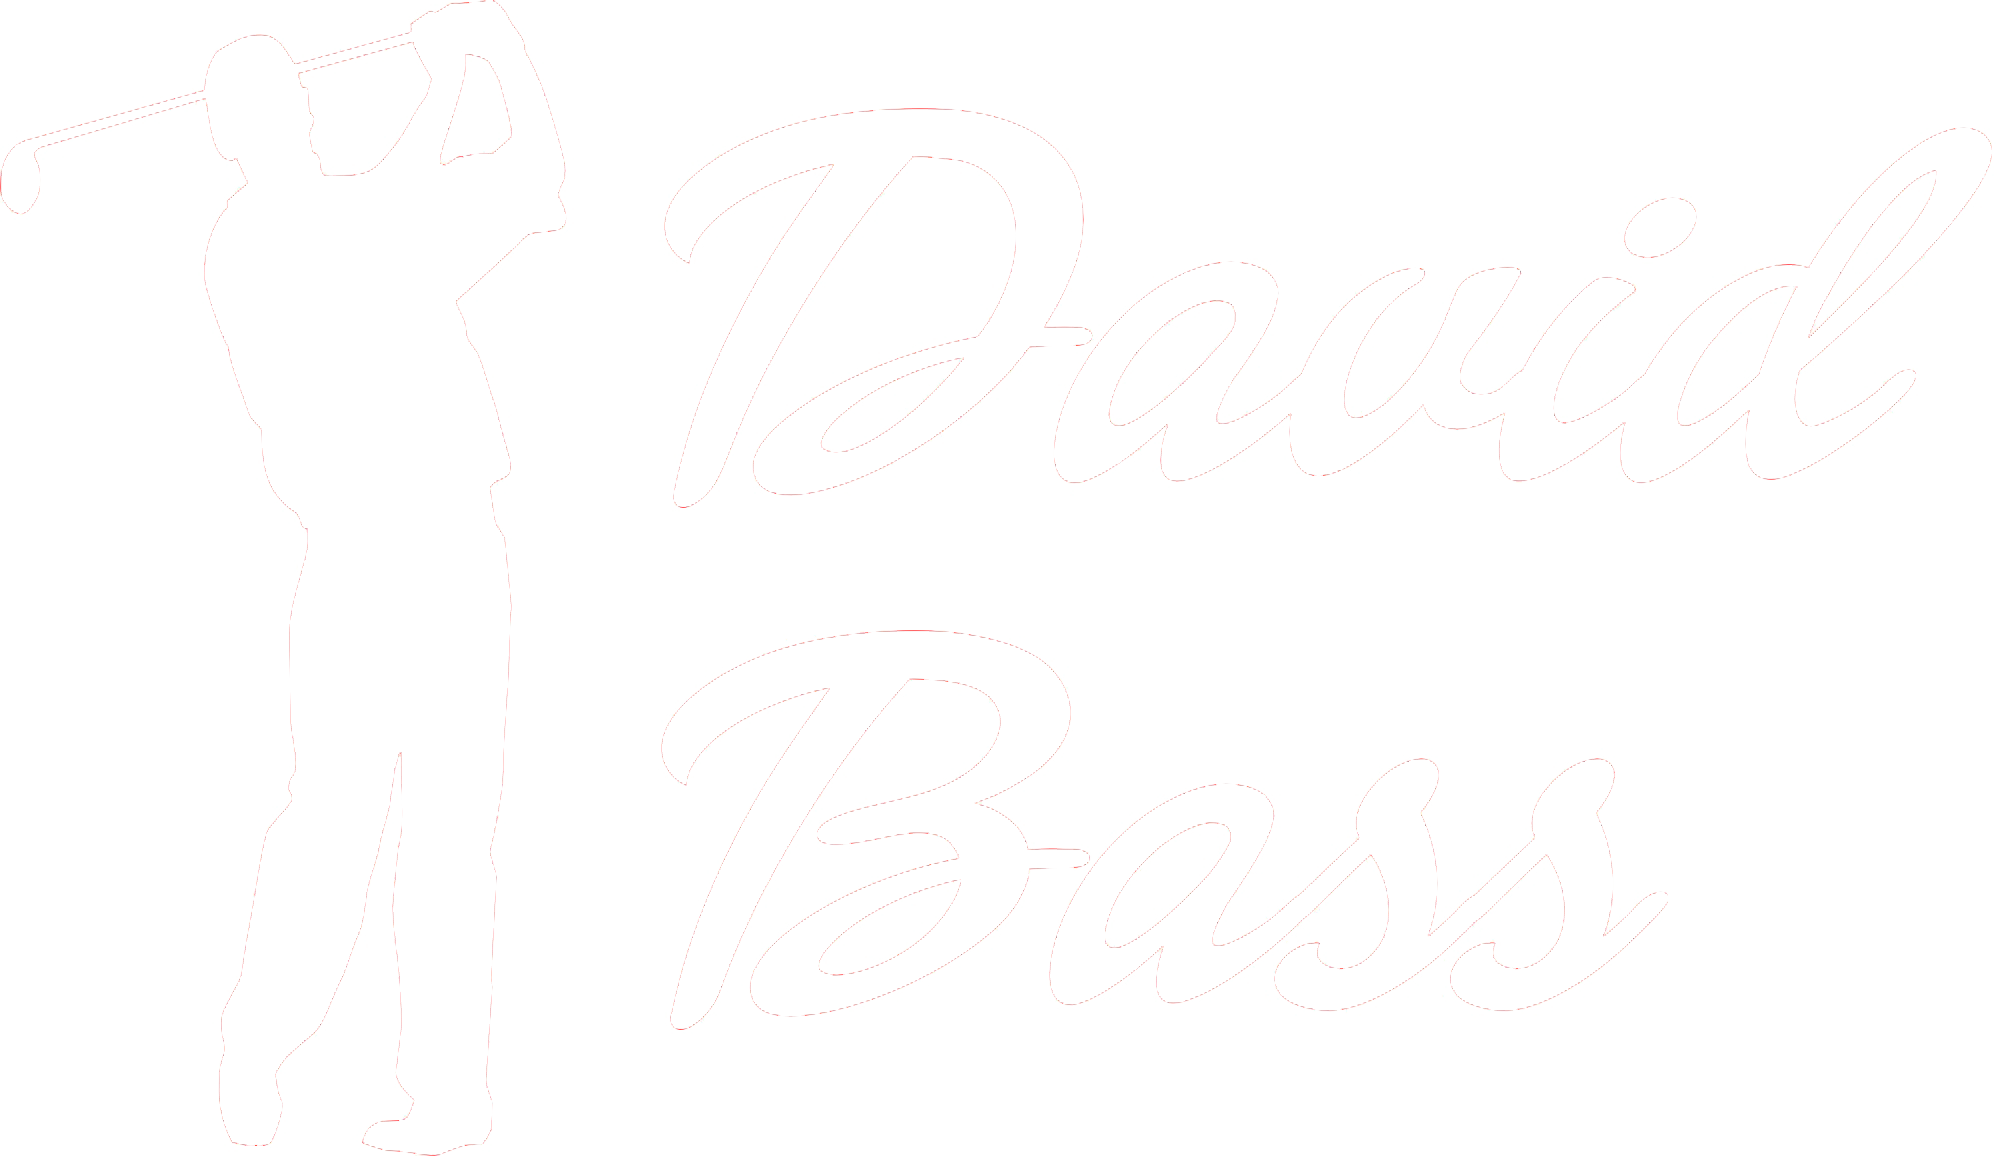 David Bass Golf